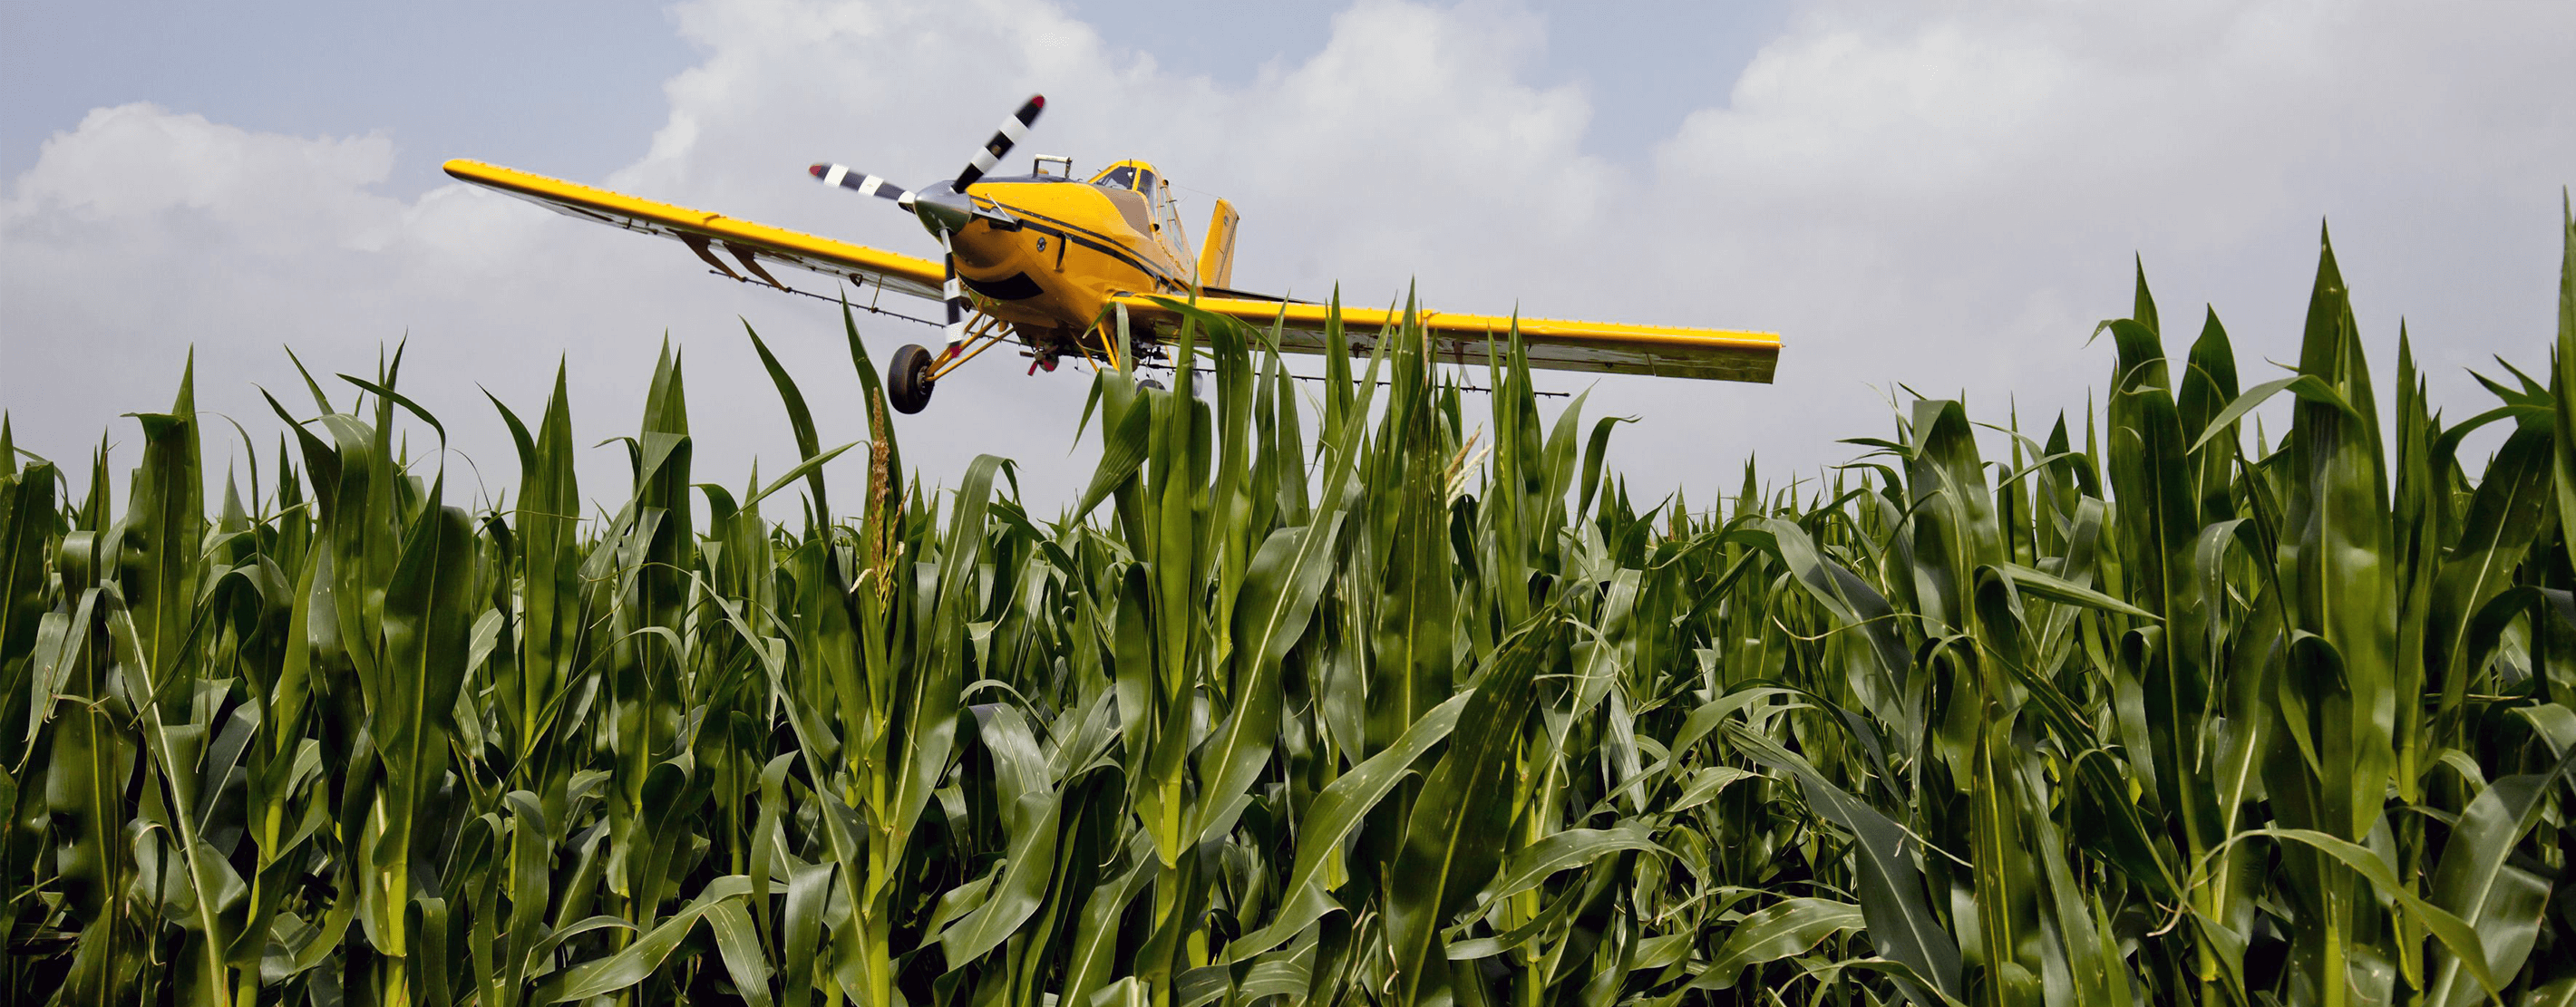 Crop Dusting Plane Flying Over Corn Field